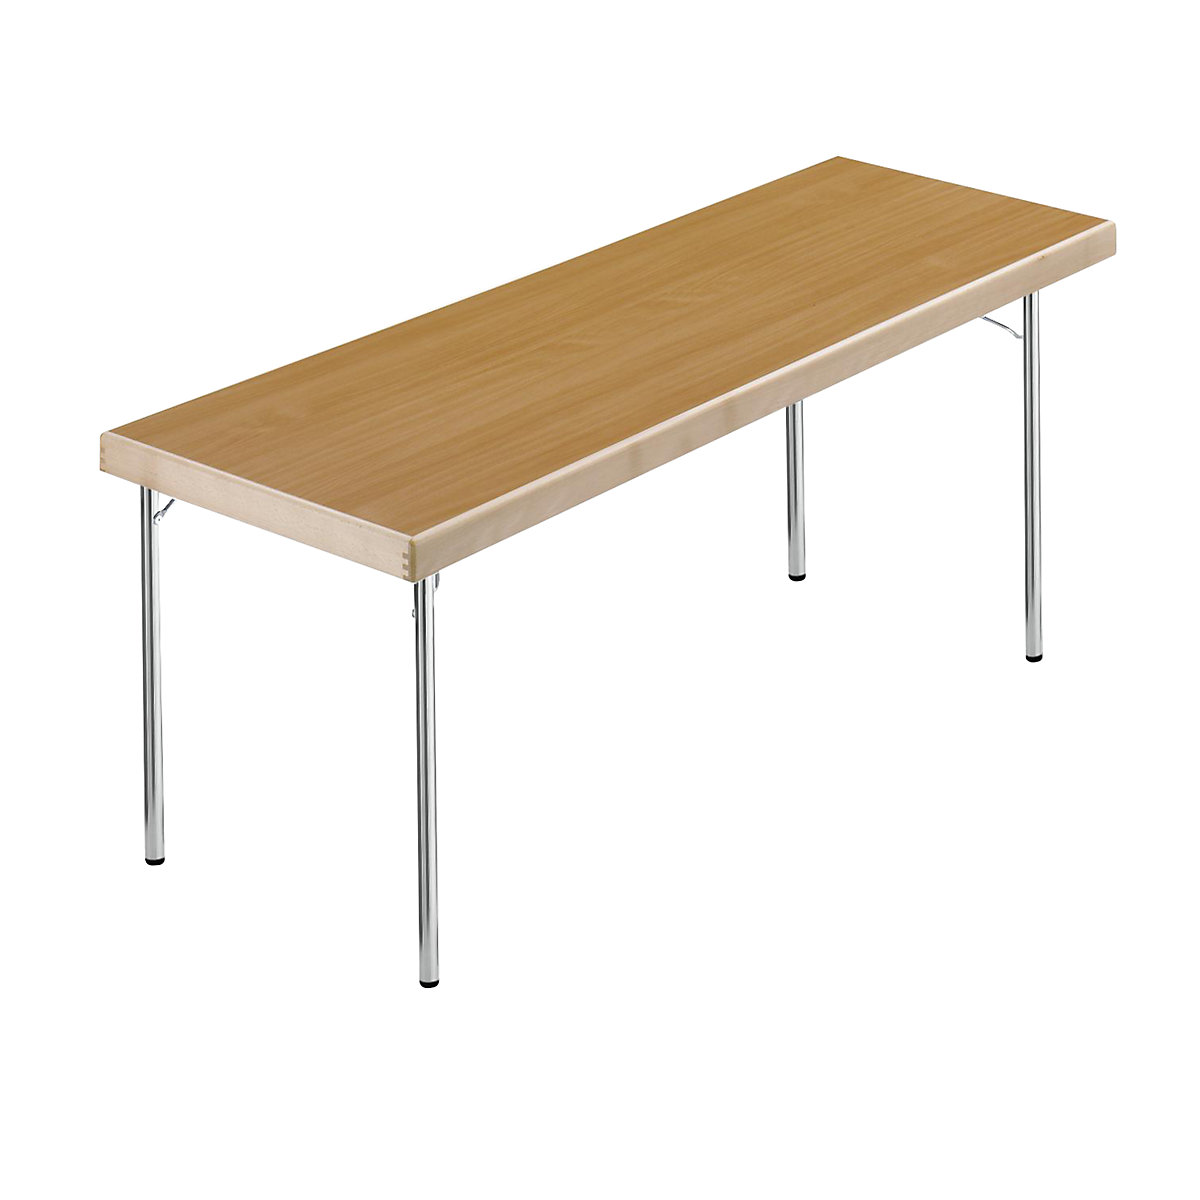 Inklapbare tafel, 4 voetsframe, 1700 x 700 mm, frame verchroomd, blad beukenhoutdecor-8